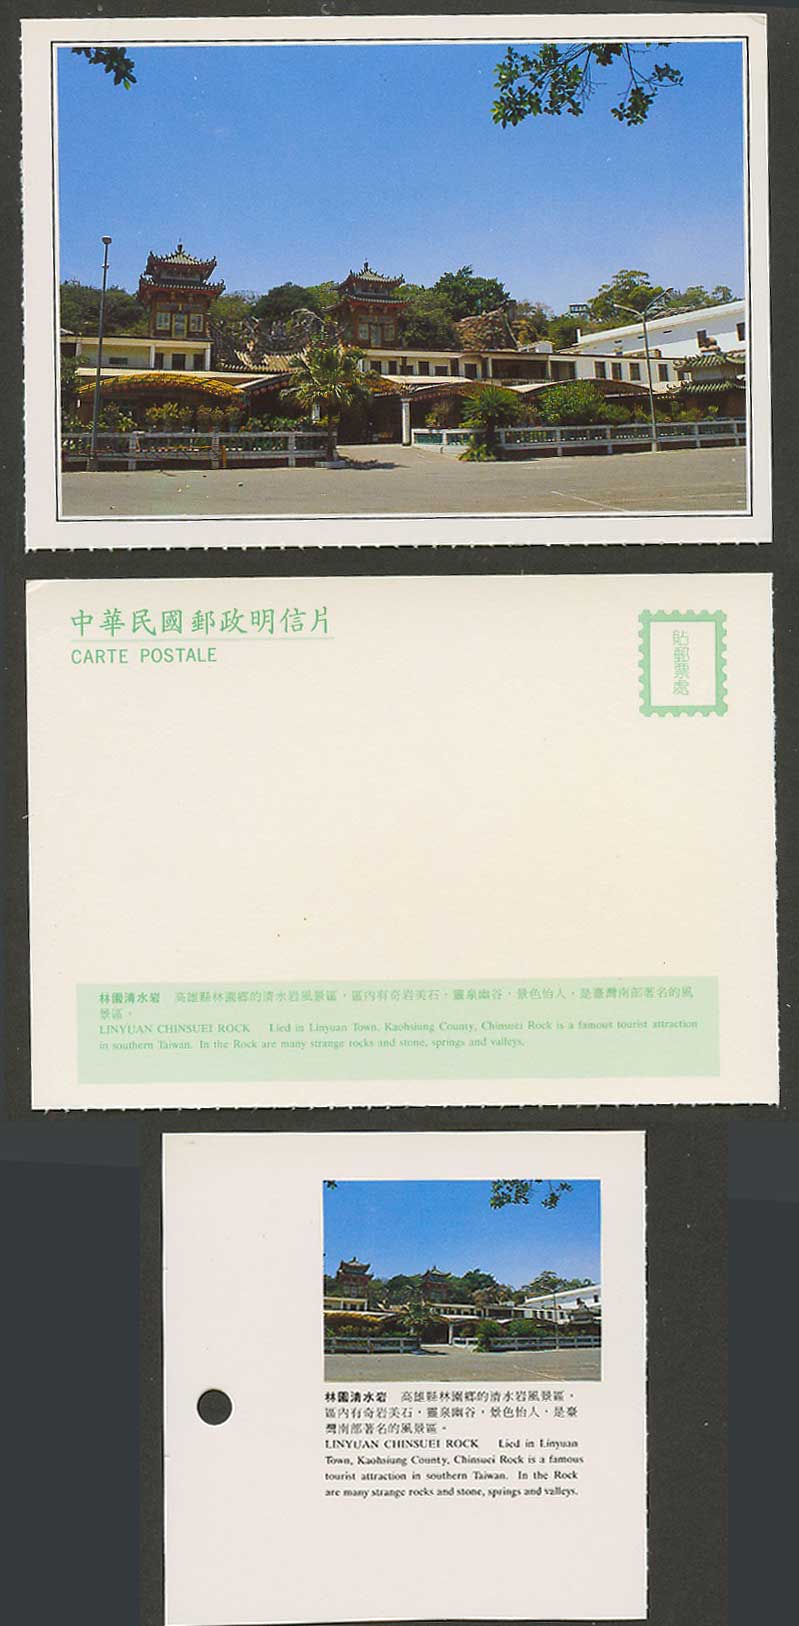 Taiwan Formosa China Postcard Linyuan Chinsuei Rock Kaohsiung 林園清水岩 高雄縣林園鄉清水岩風景區